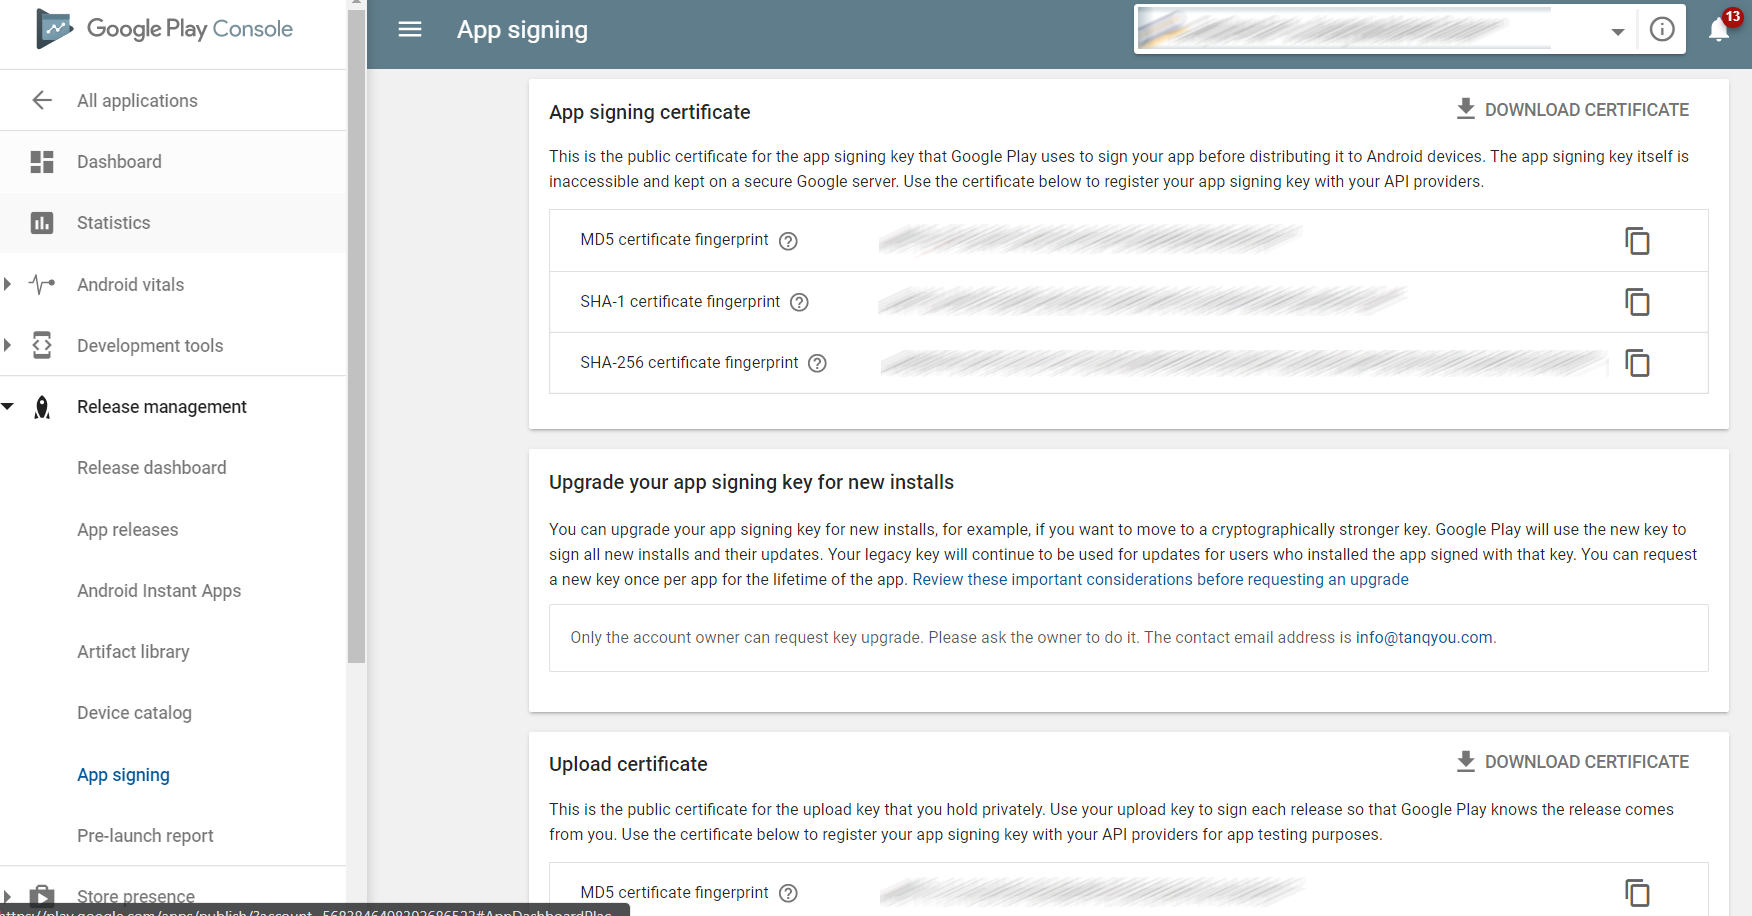 Google Play Console - Get App signing certificate SHA-1 certificate fingerprint